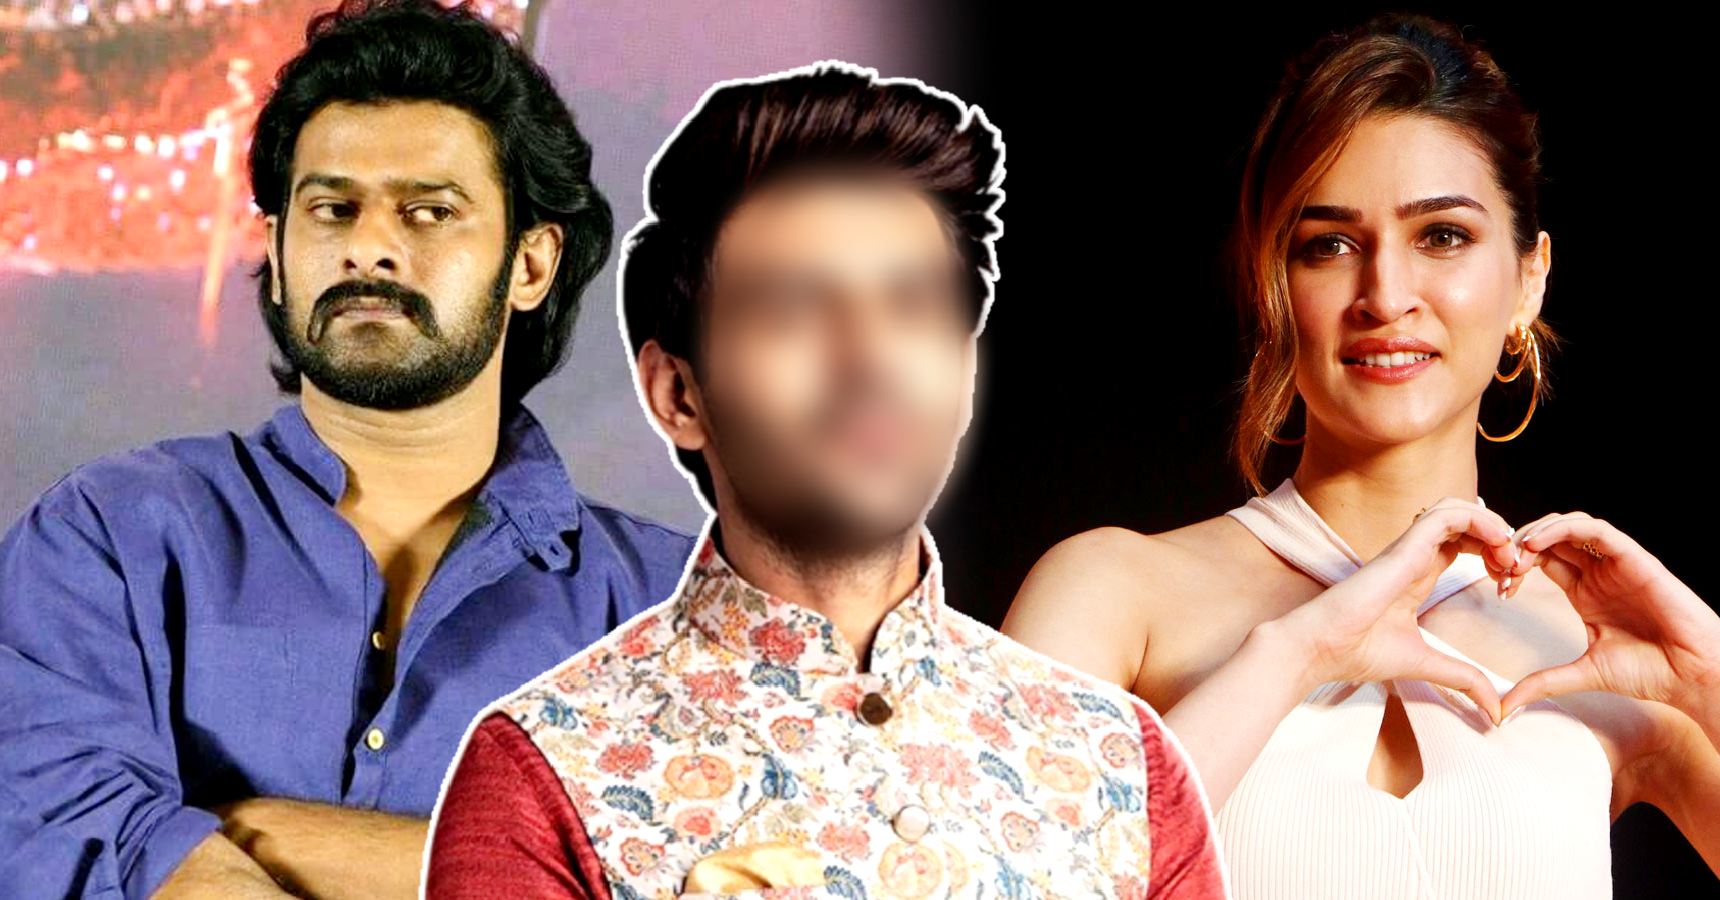 Amid dating rumours with Prabhas, Kriti Sanon reveals her boyfriend name